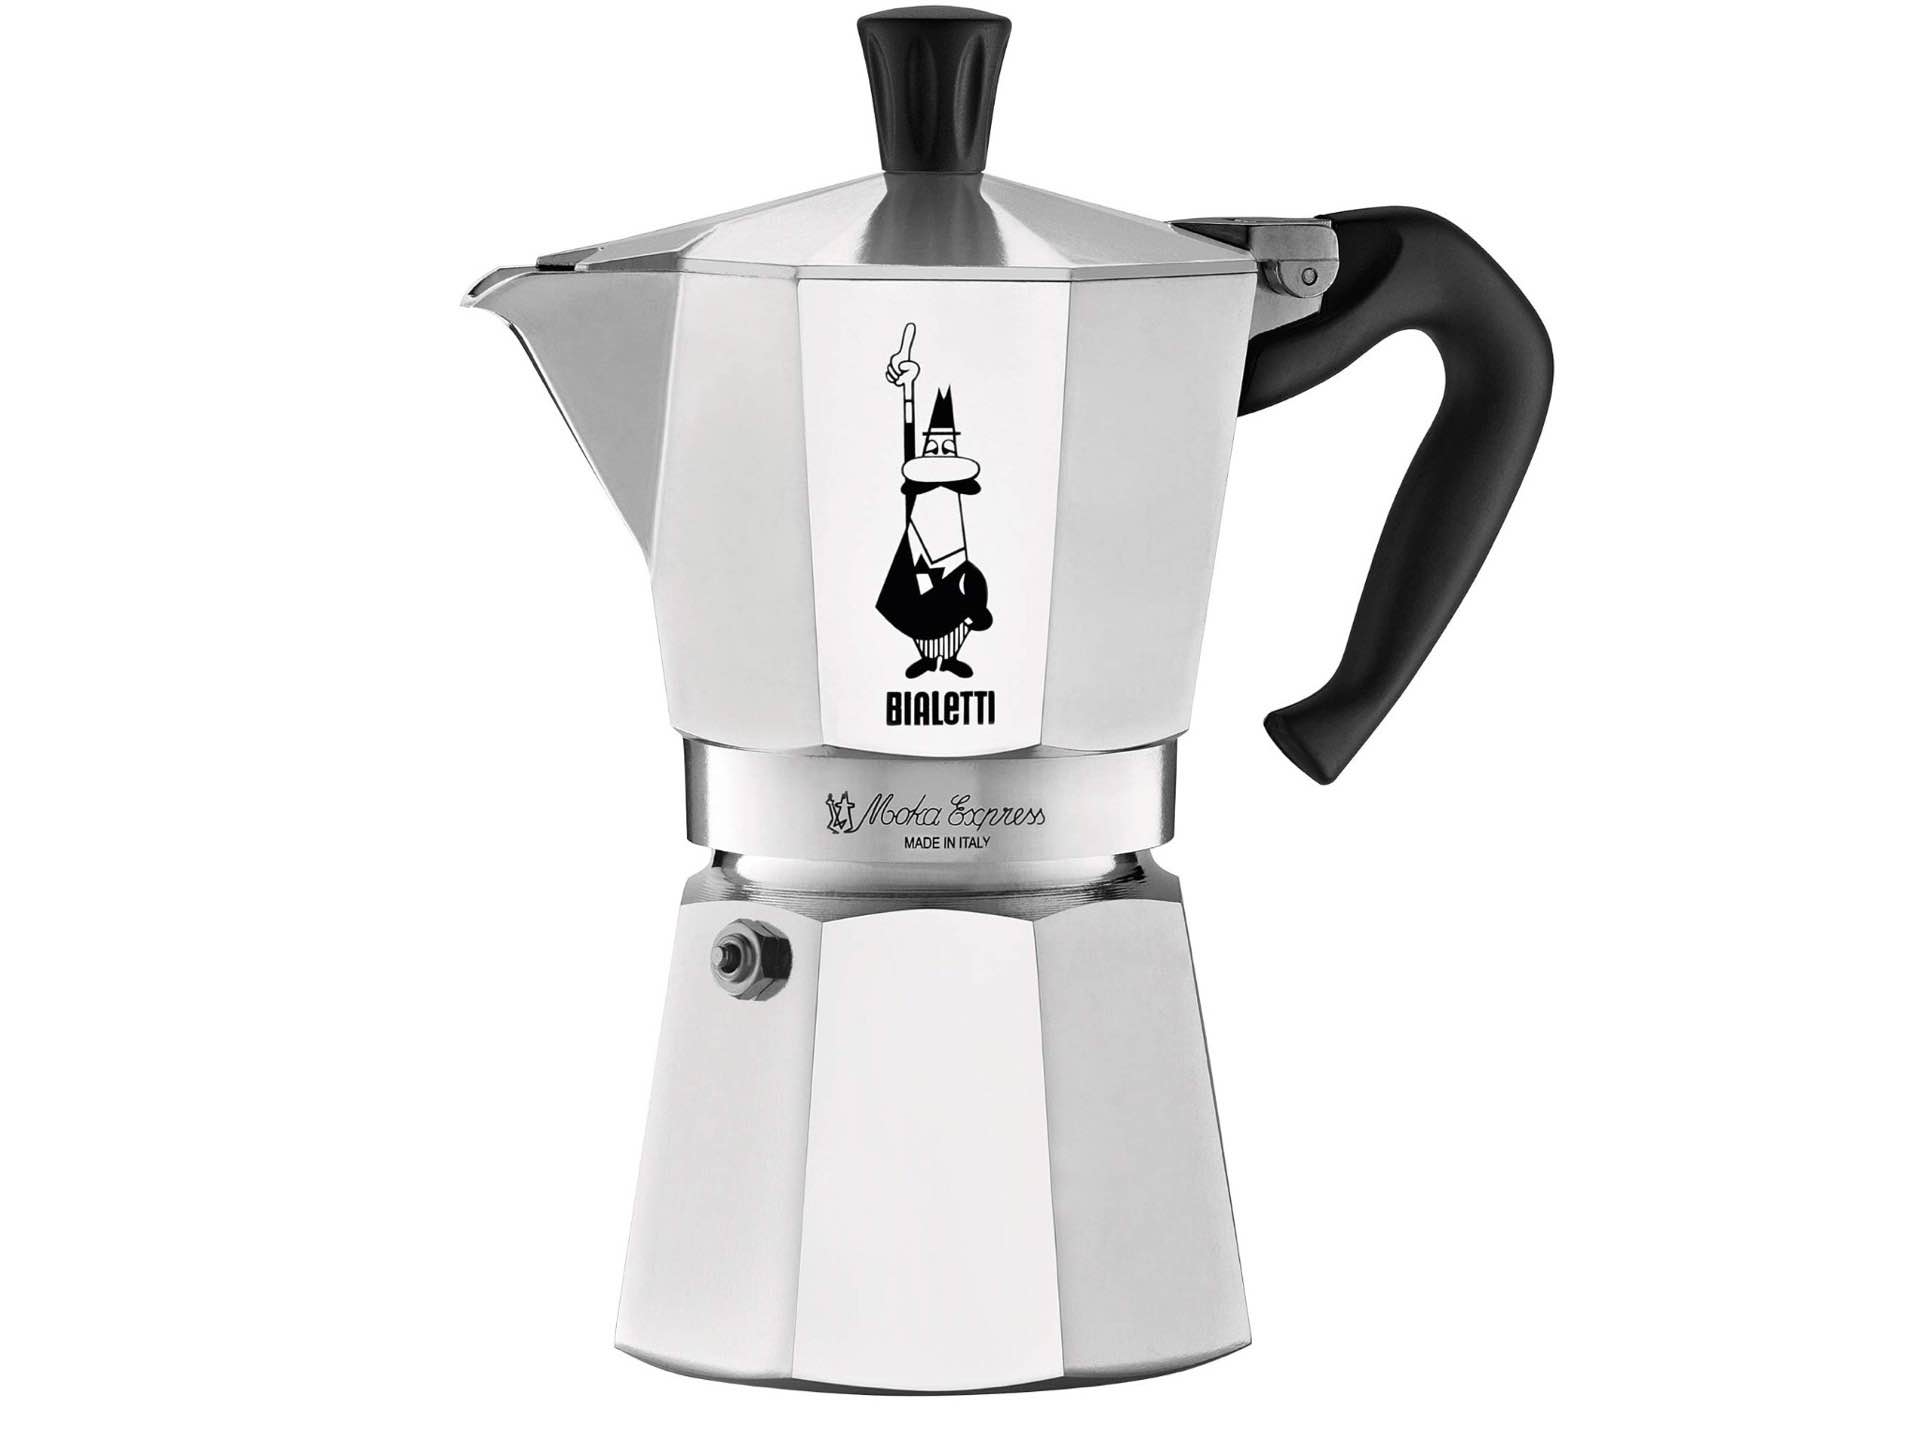 The classic moka pot stovetop coffee maker. ($35)